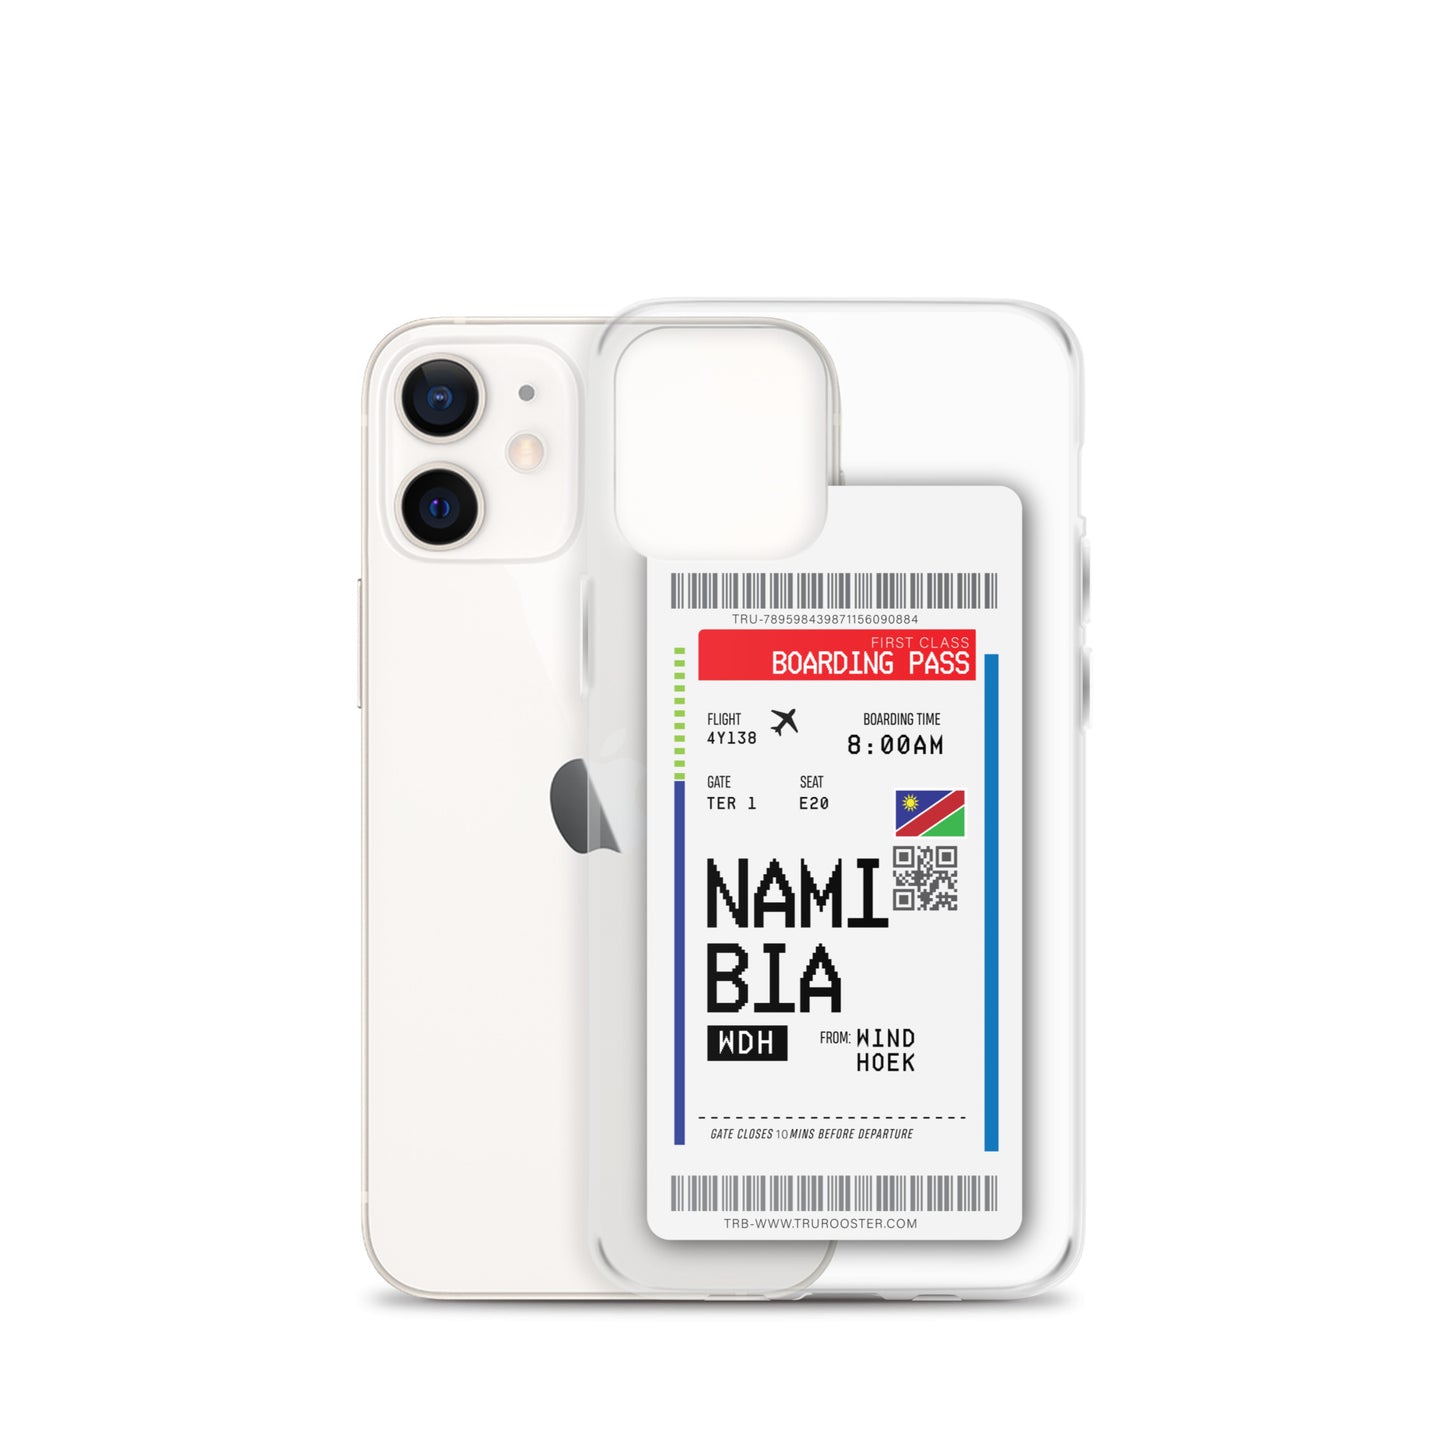 Namibia Transit Boarding pass iPhone Case